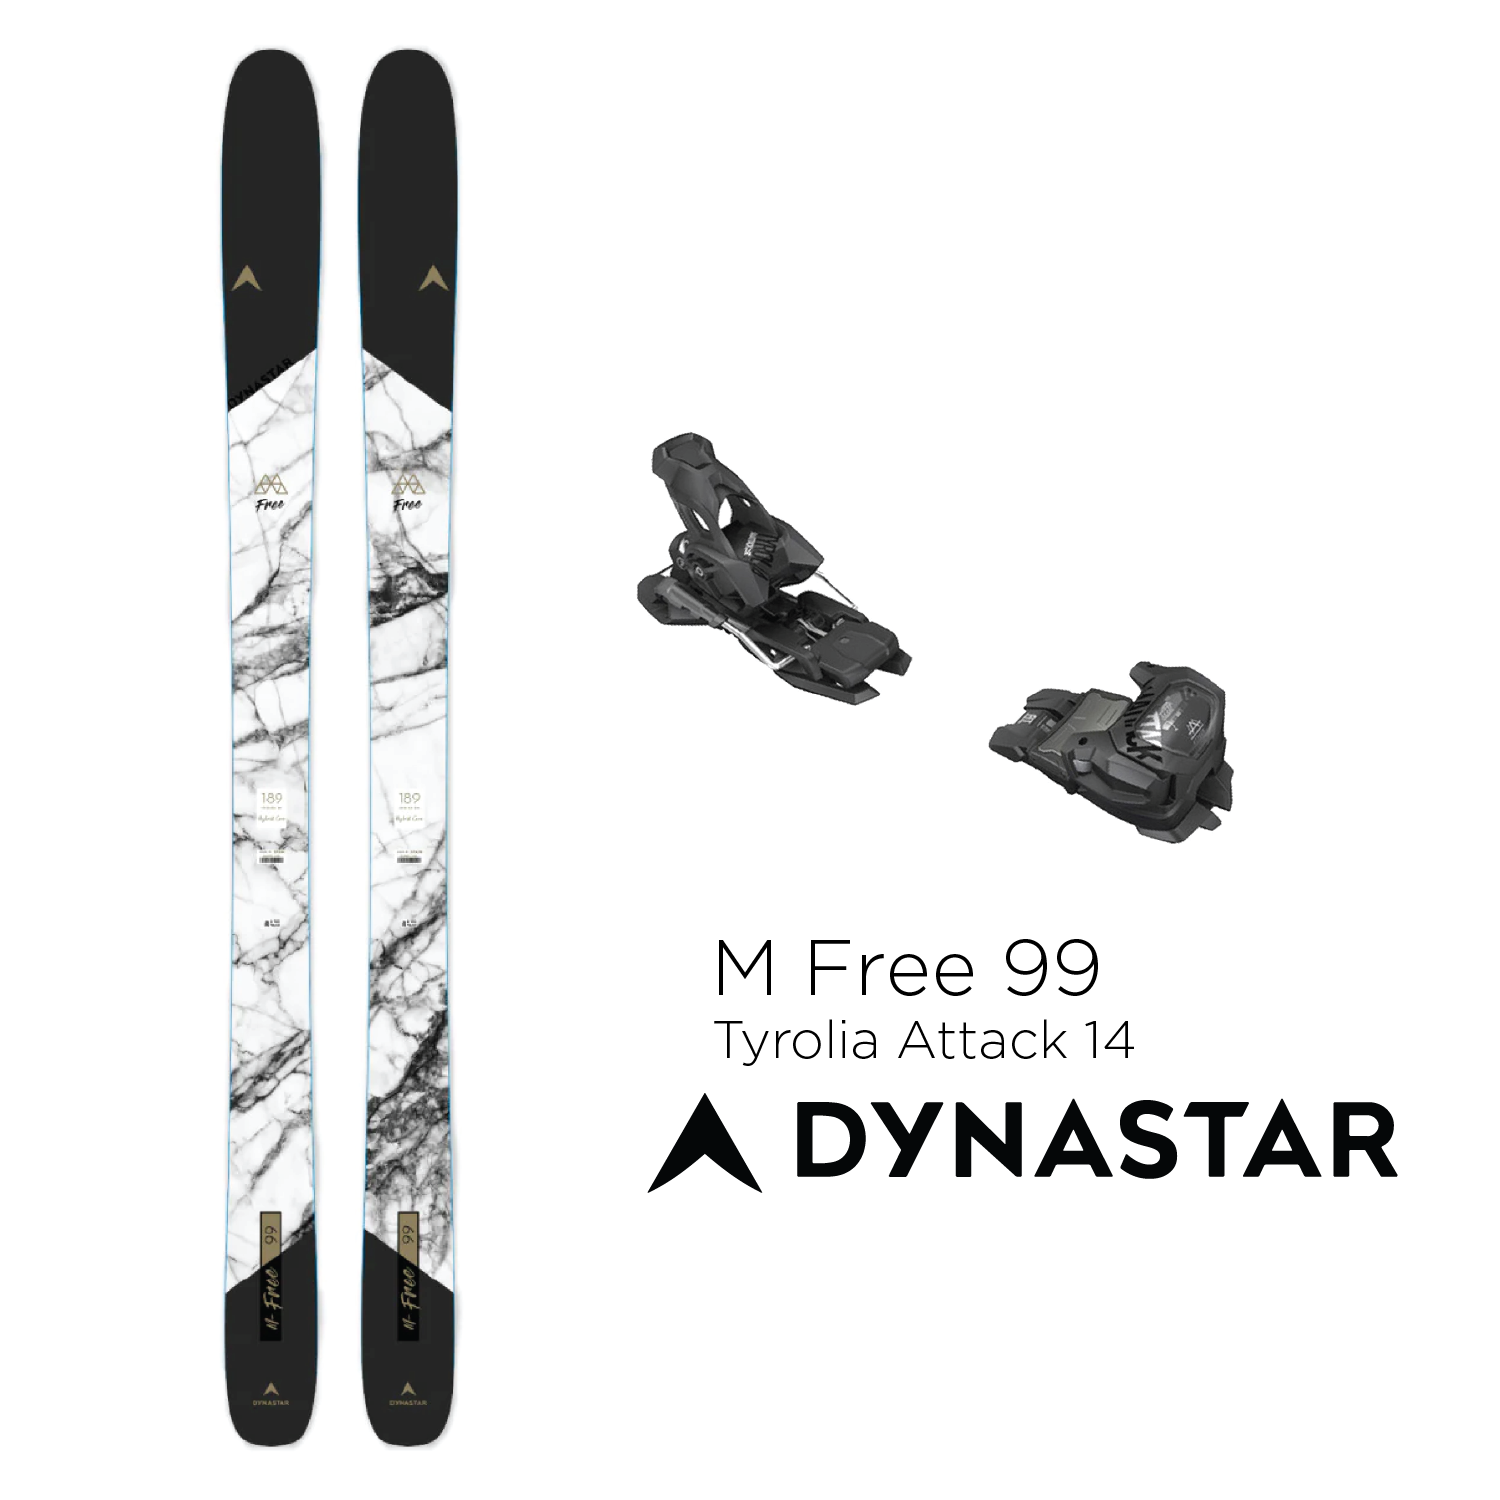 DynastarM-Free99.png